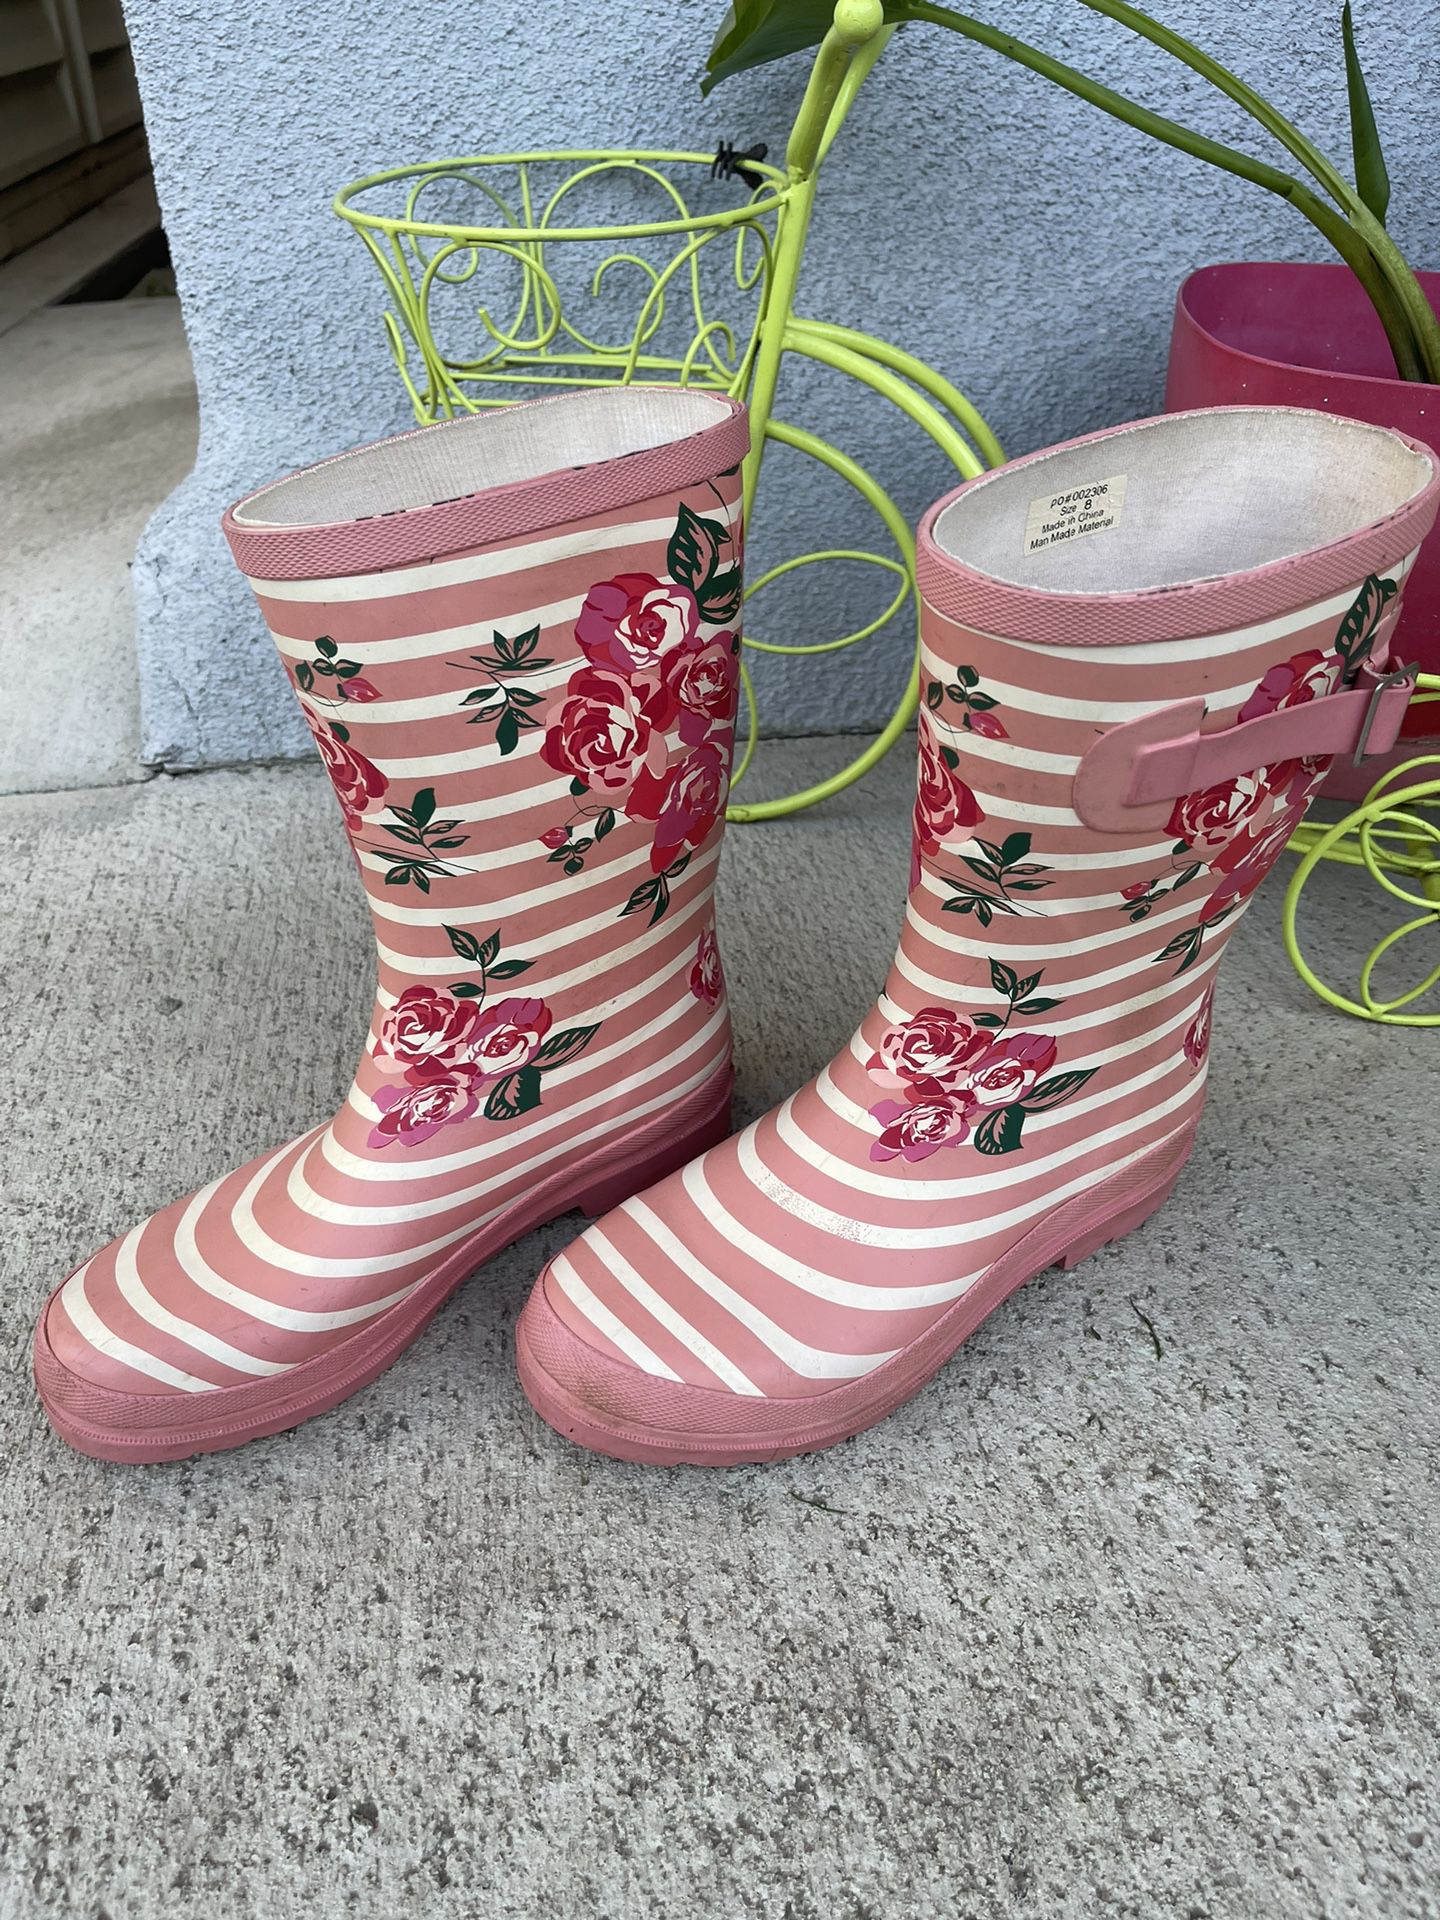 Women’s Rain Boots 🥾 size 8 Pink